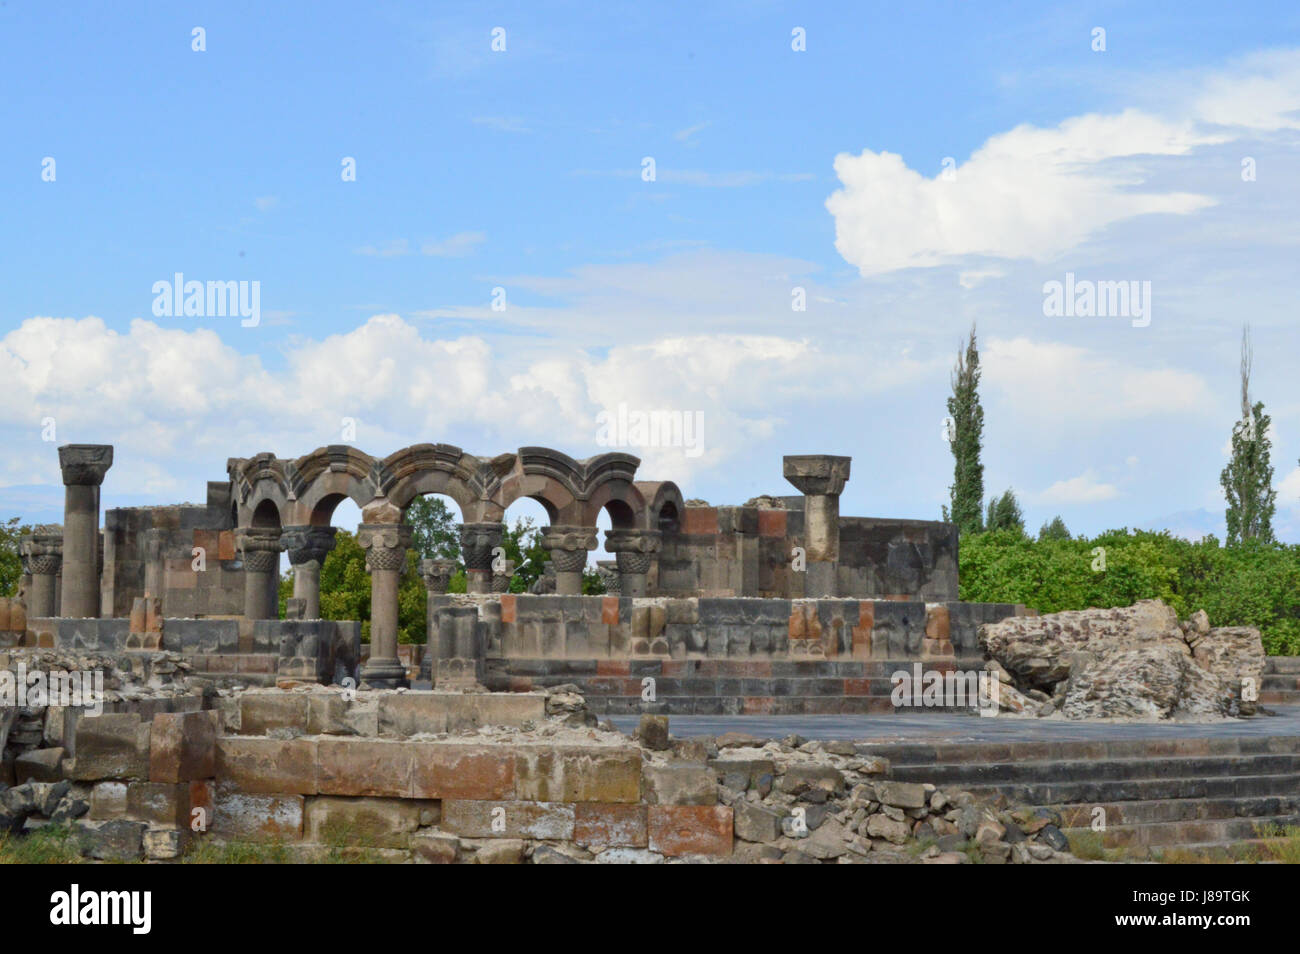 The ruins of the Zvartnots Church in Armenia - a UNESCO World Heritage Site. Stock Photo